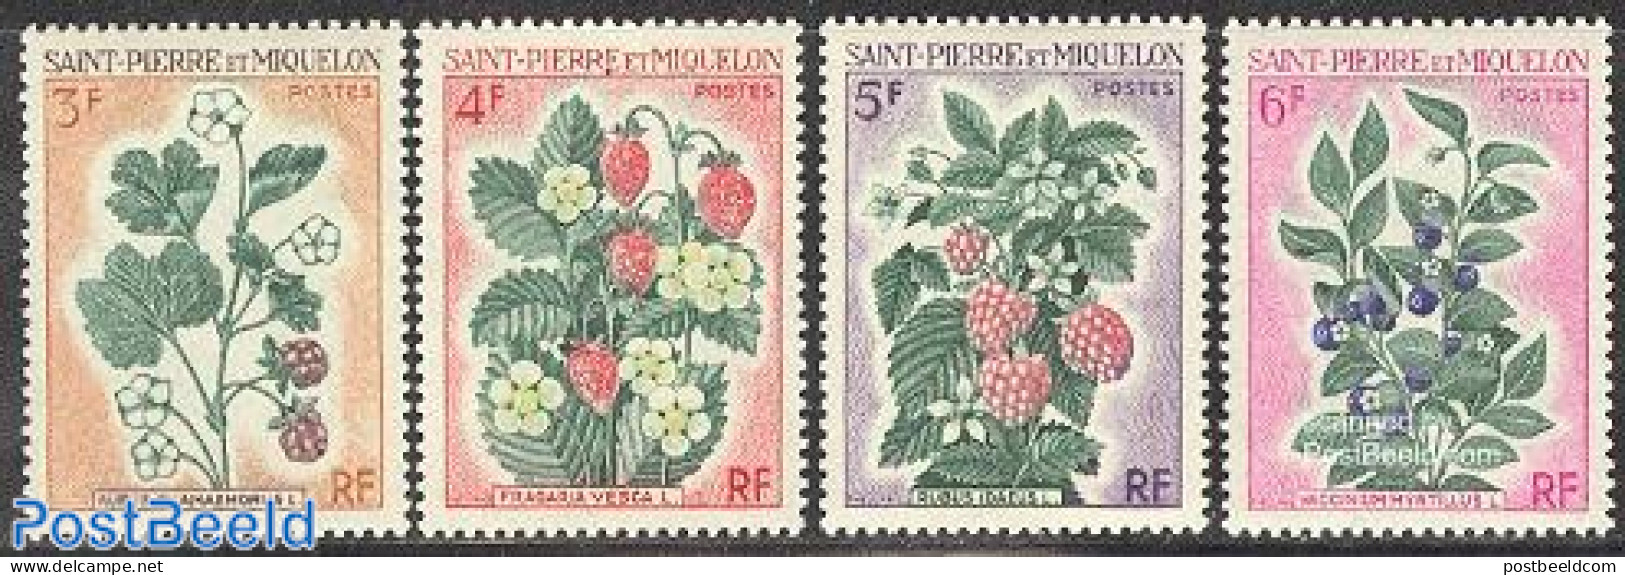 Saint Pierre And Miquelon 1970 Indigenous Fruits 4v, Mint NH, Health - Nature - Food & Drink - Flowers & Plants - Fruit - Alimentation